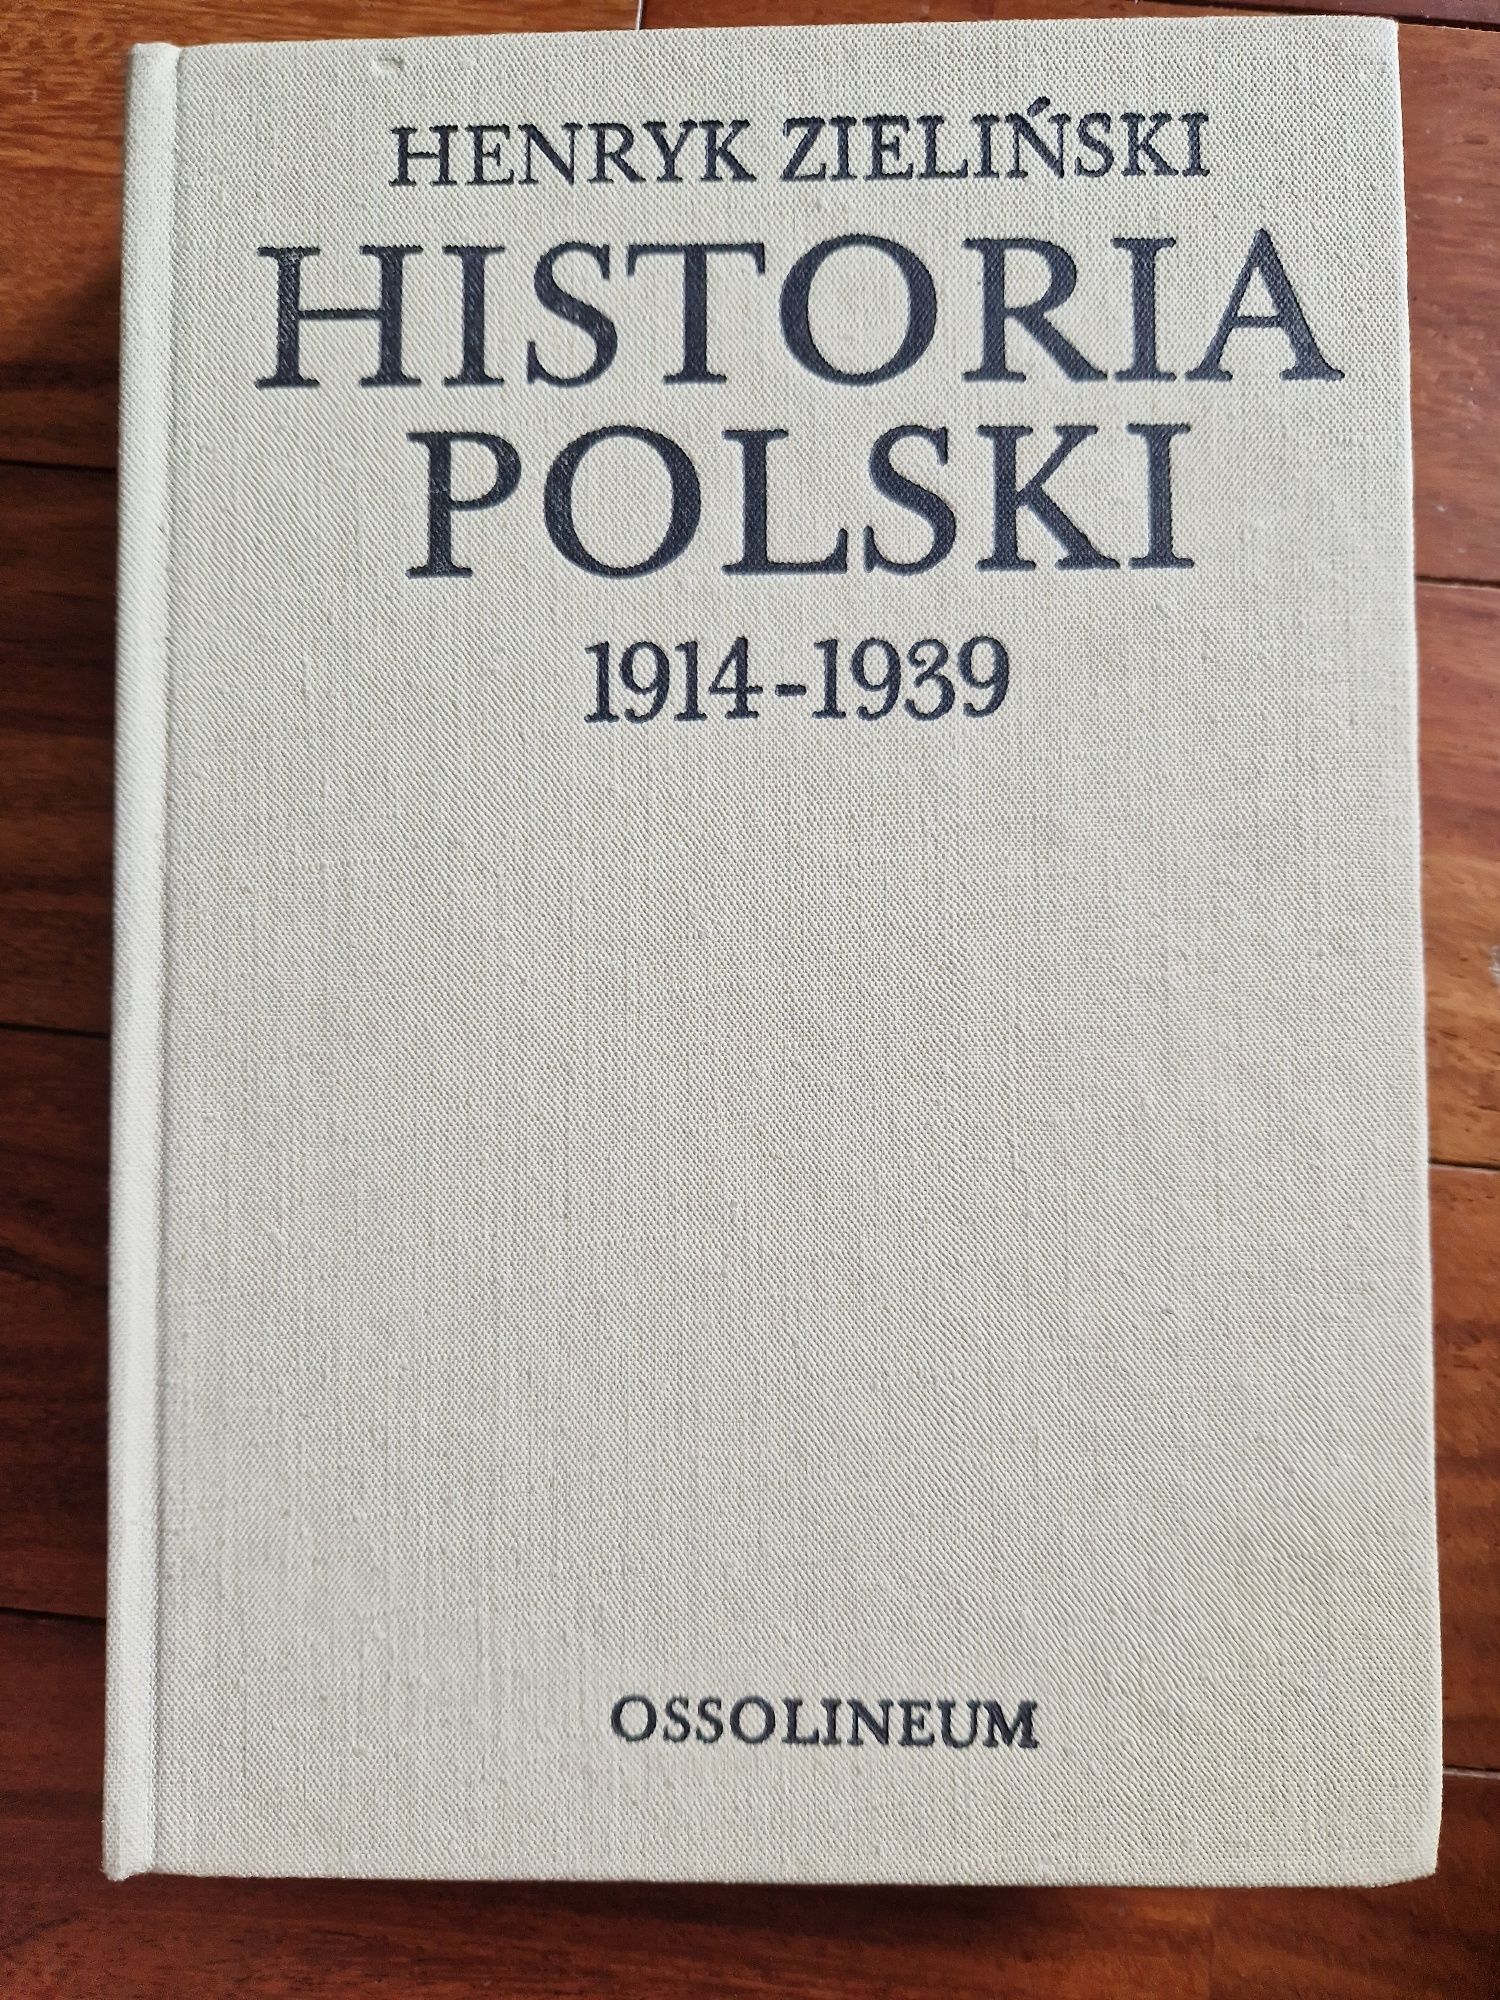 Historia Polski  1914/39 Henryk Zieliński
HISTORIA

POWSZECHNA XVI-XVI